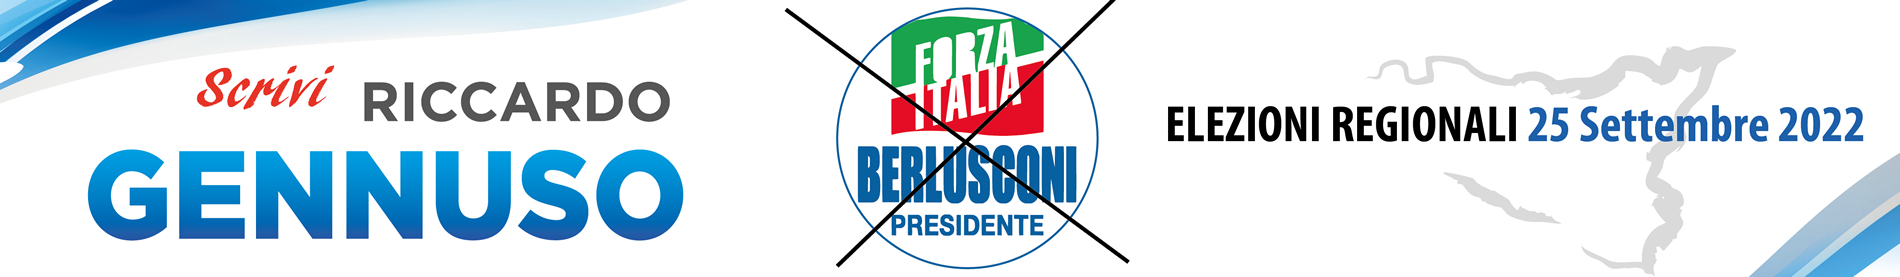 Banner elettorale maxi gennuso